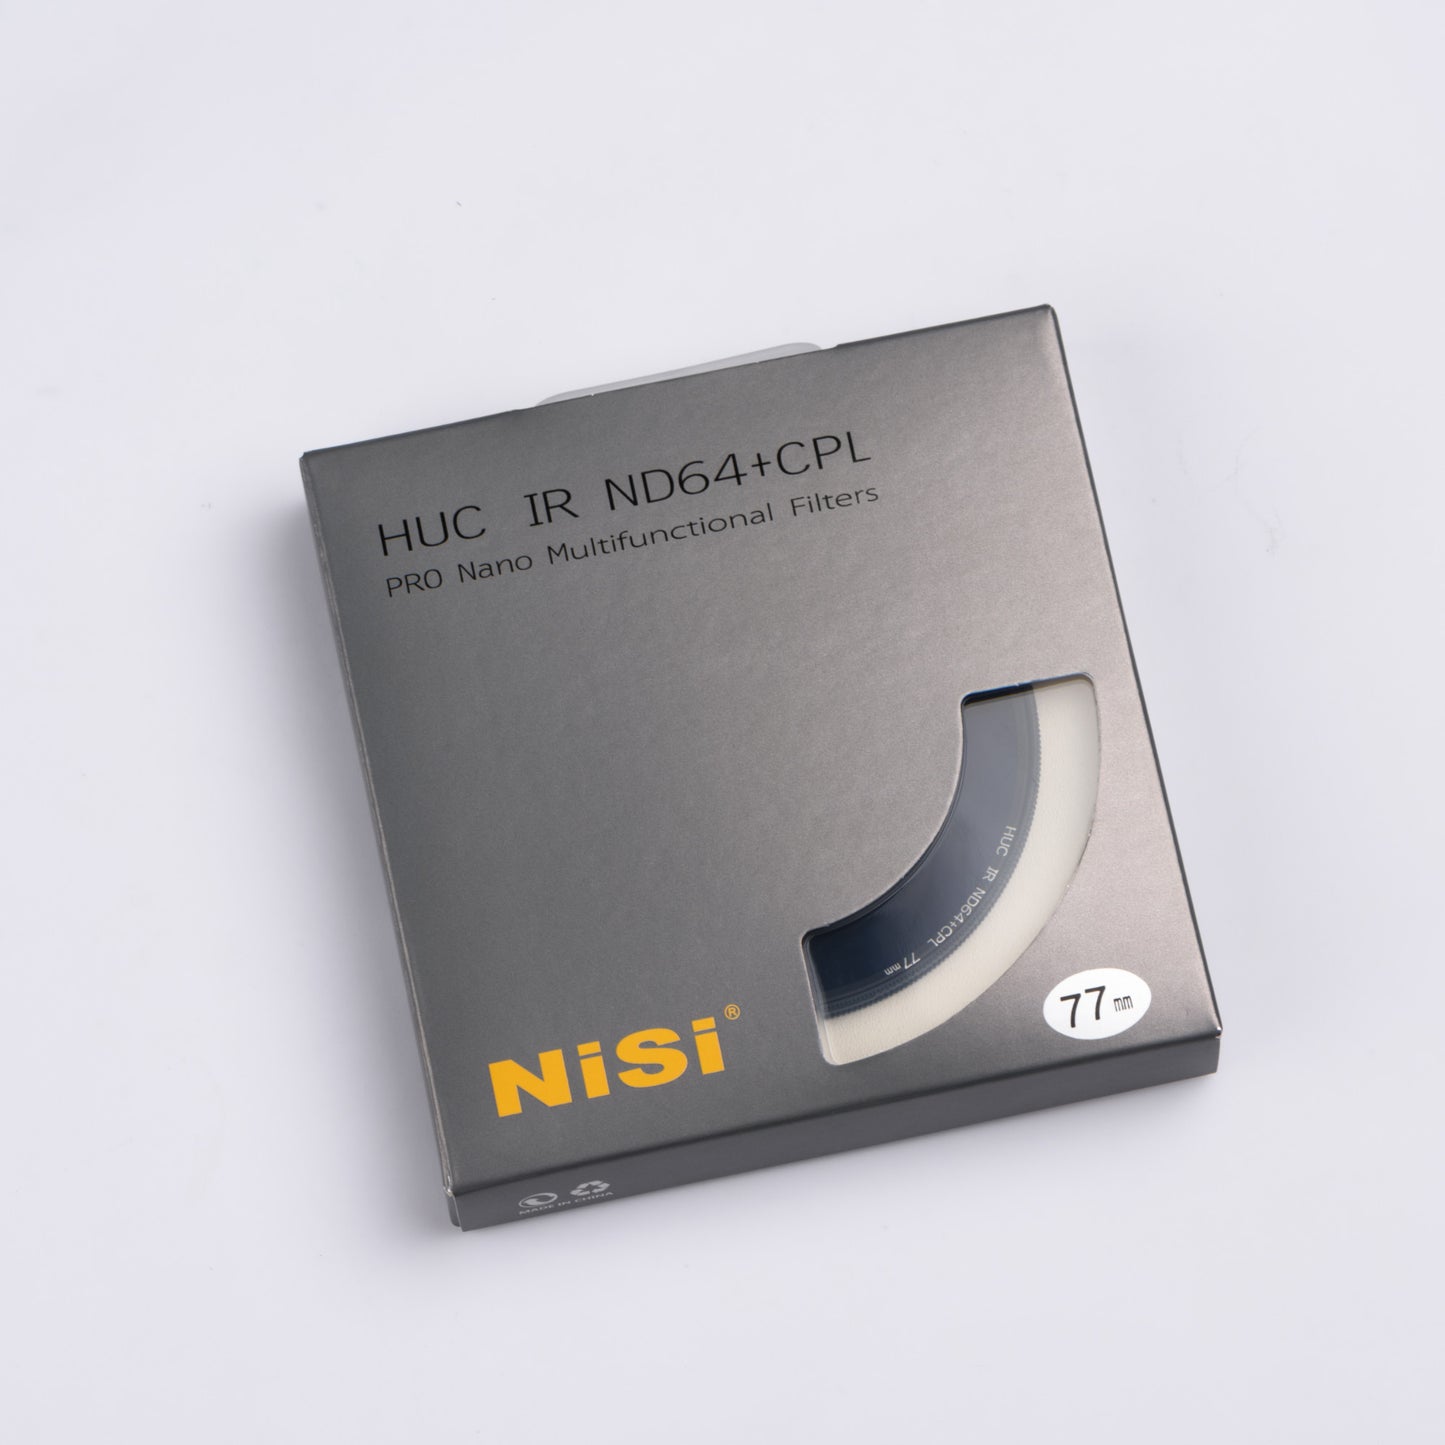 NiSi HUC PRO Nano IR ND64 + CPL 72mm Multifunctional Filter